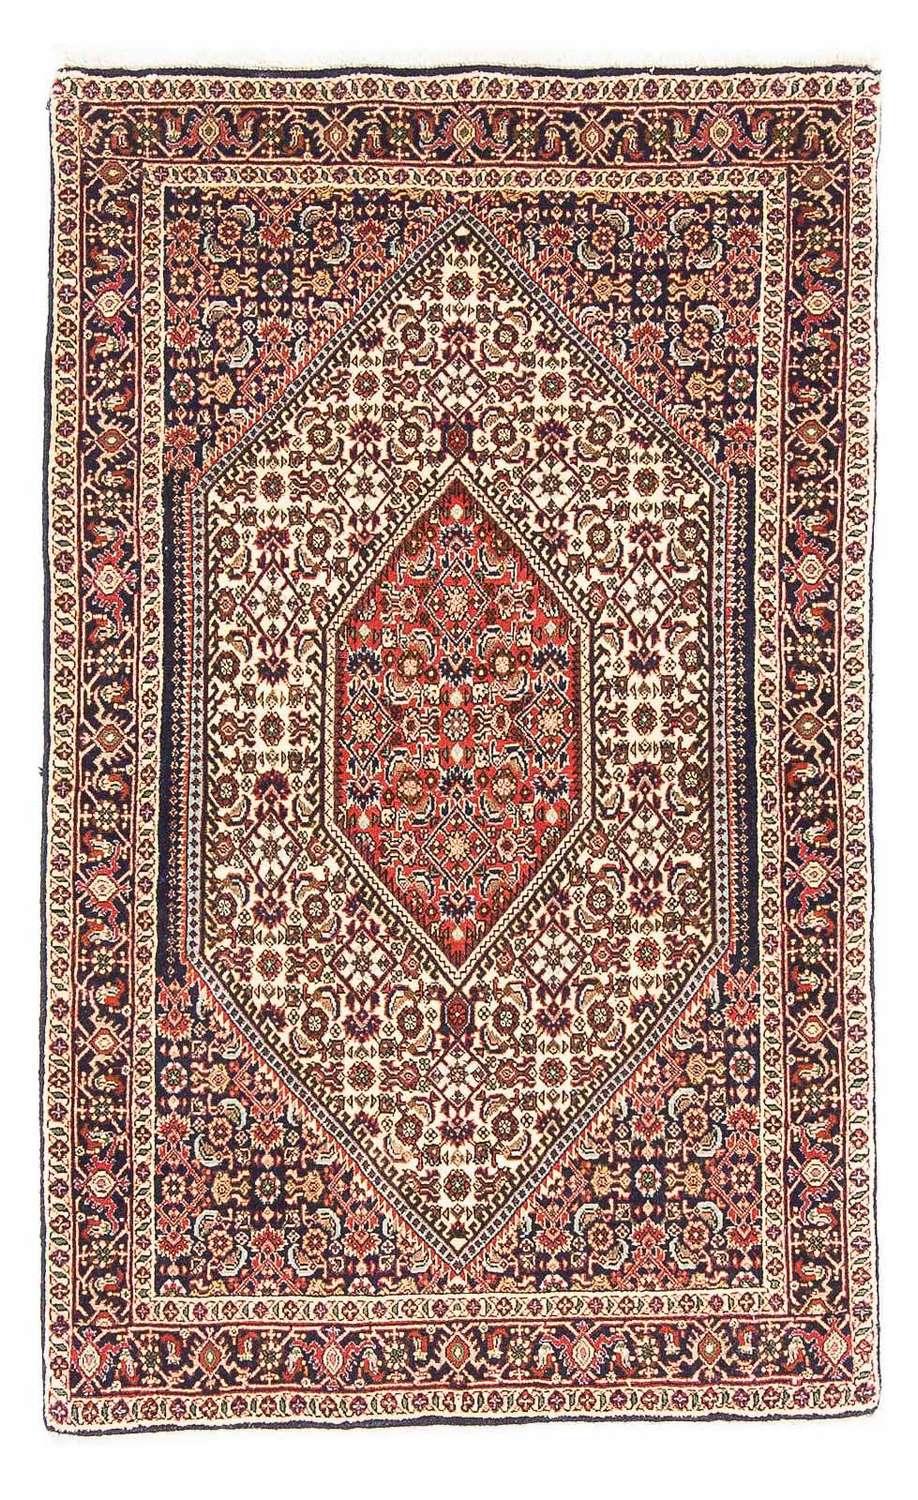 Persisk teppe - Bijar - 140 x 88 cm - beige